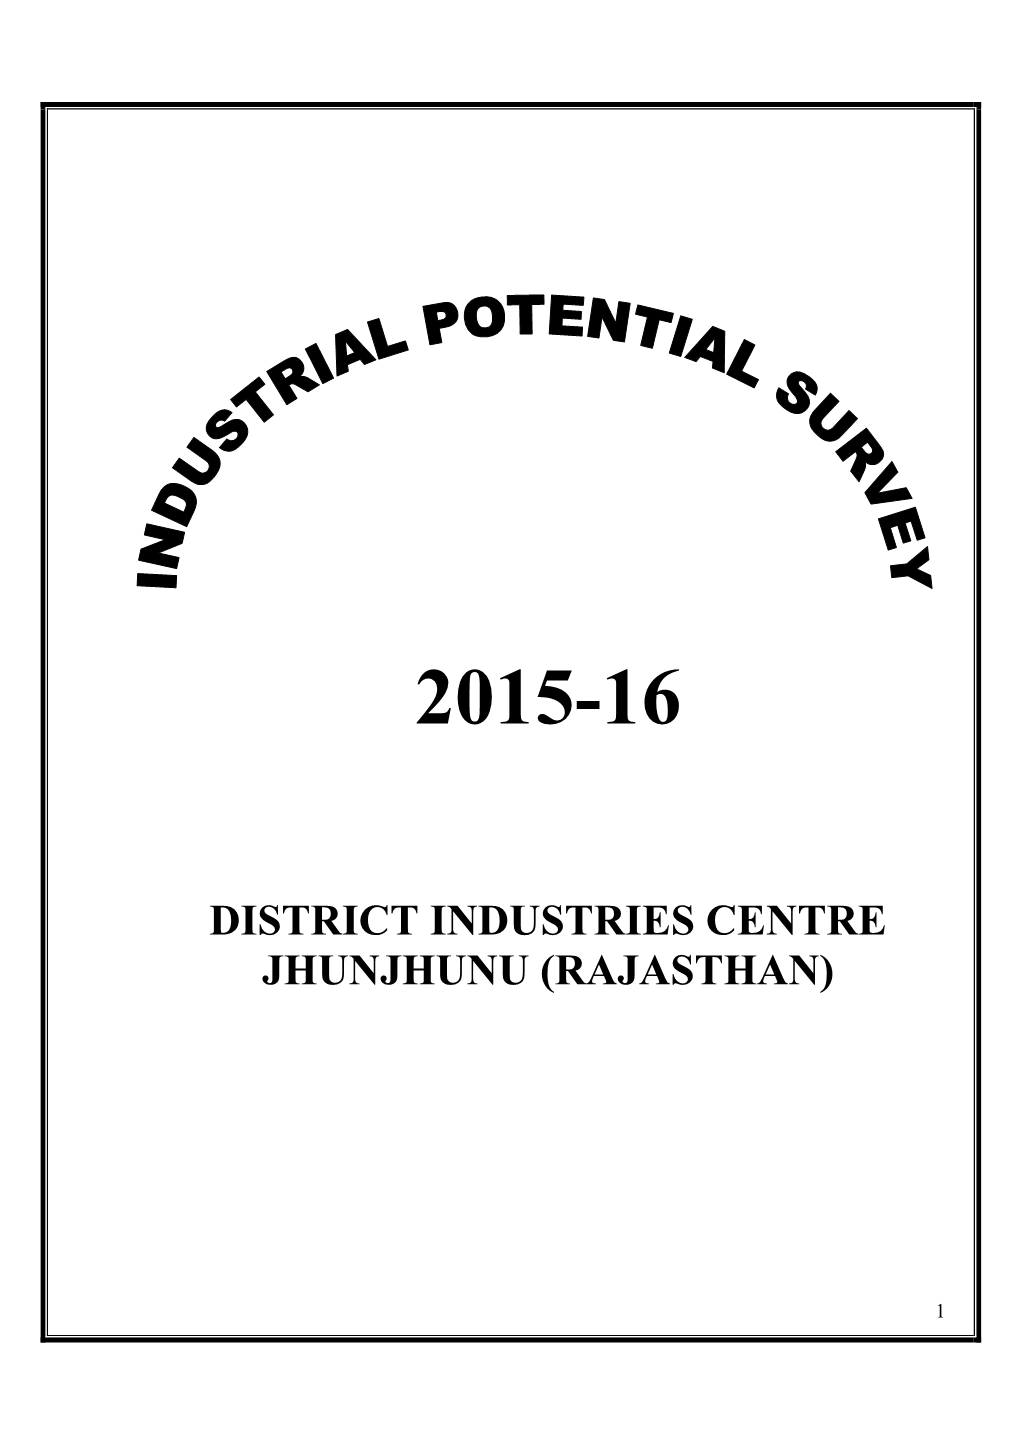 District Industries Centre Jhunjhunu (Rajasthan)